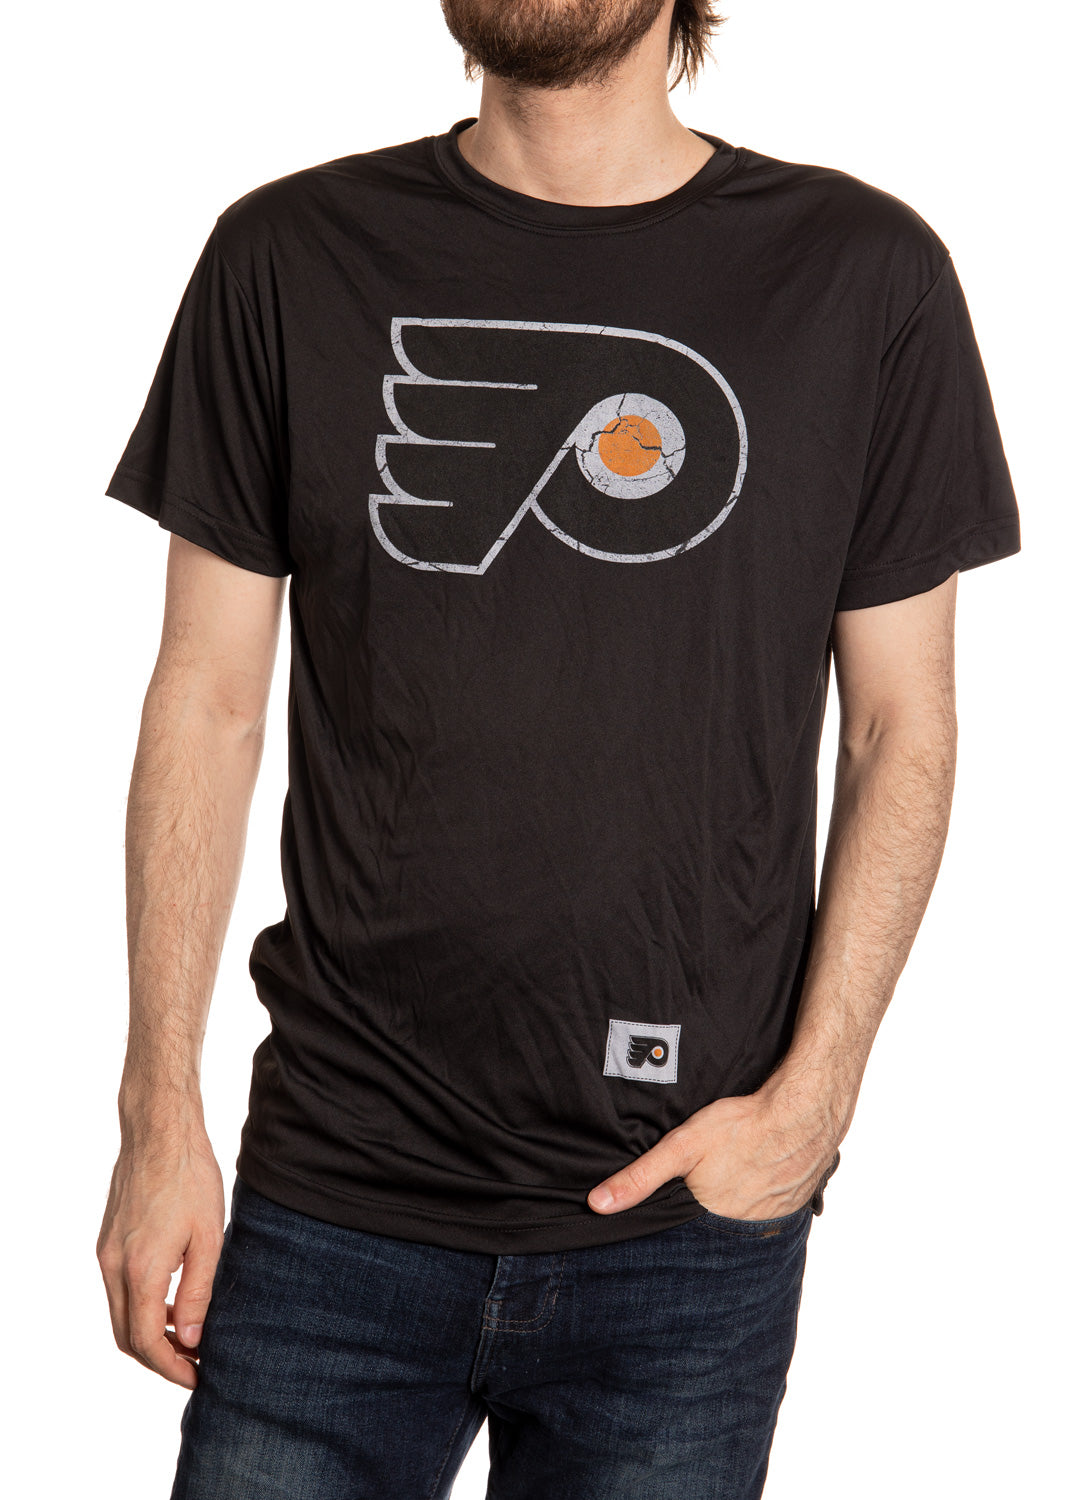 Philadelphia Flyers Short Sleeve Rashguard - Distressed Logo Front View